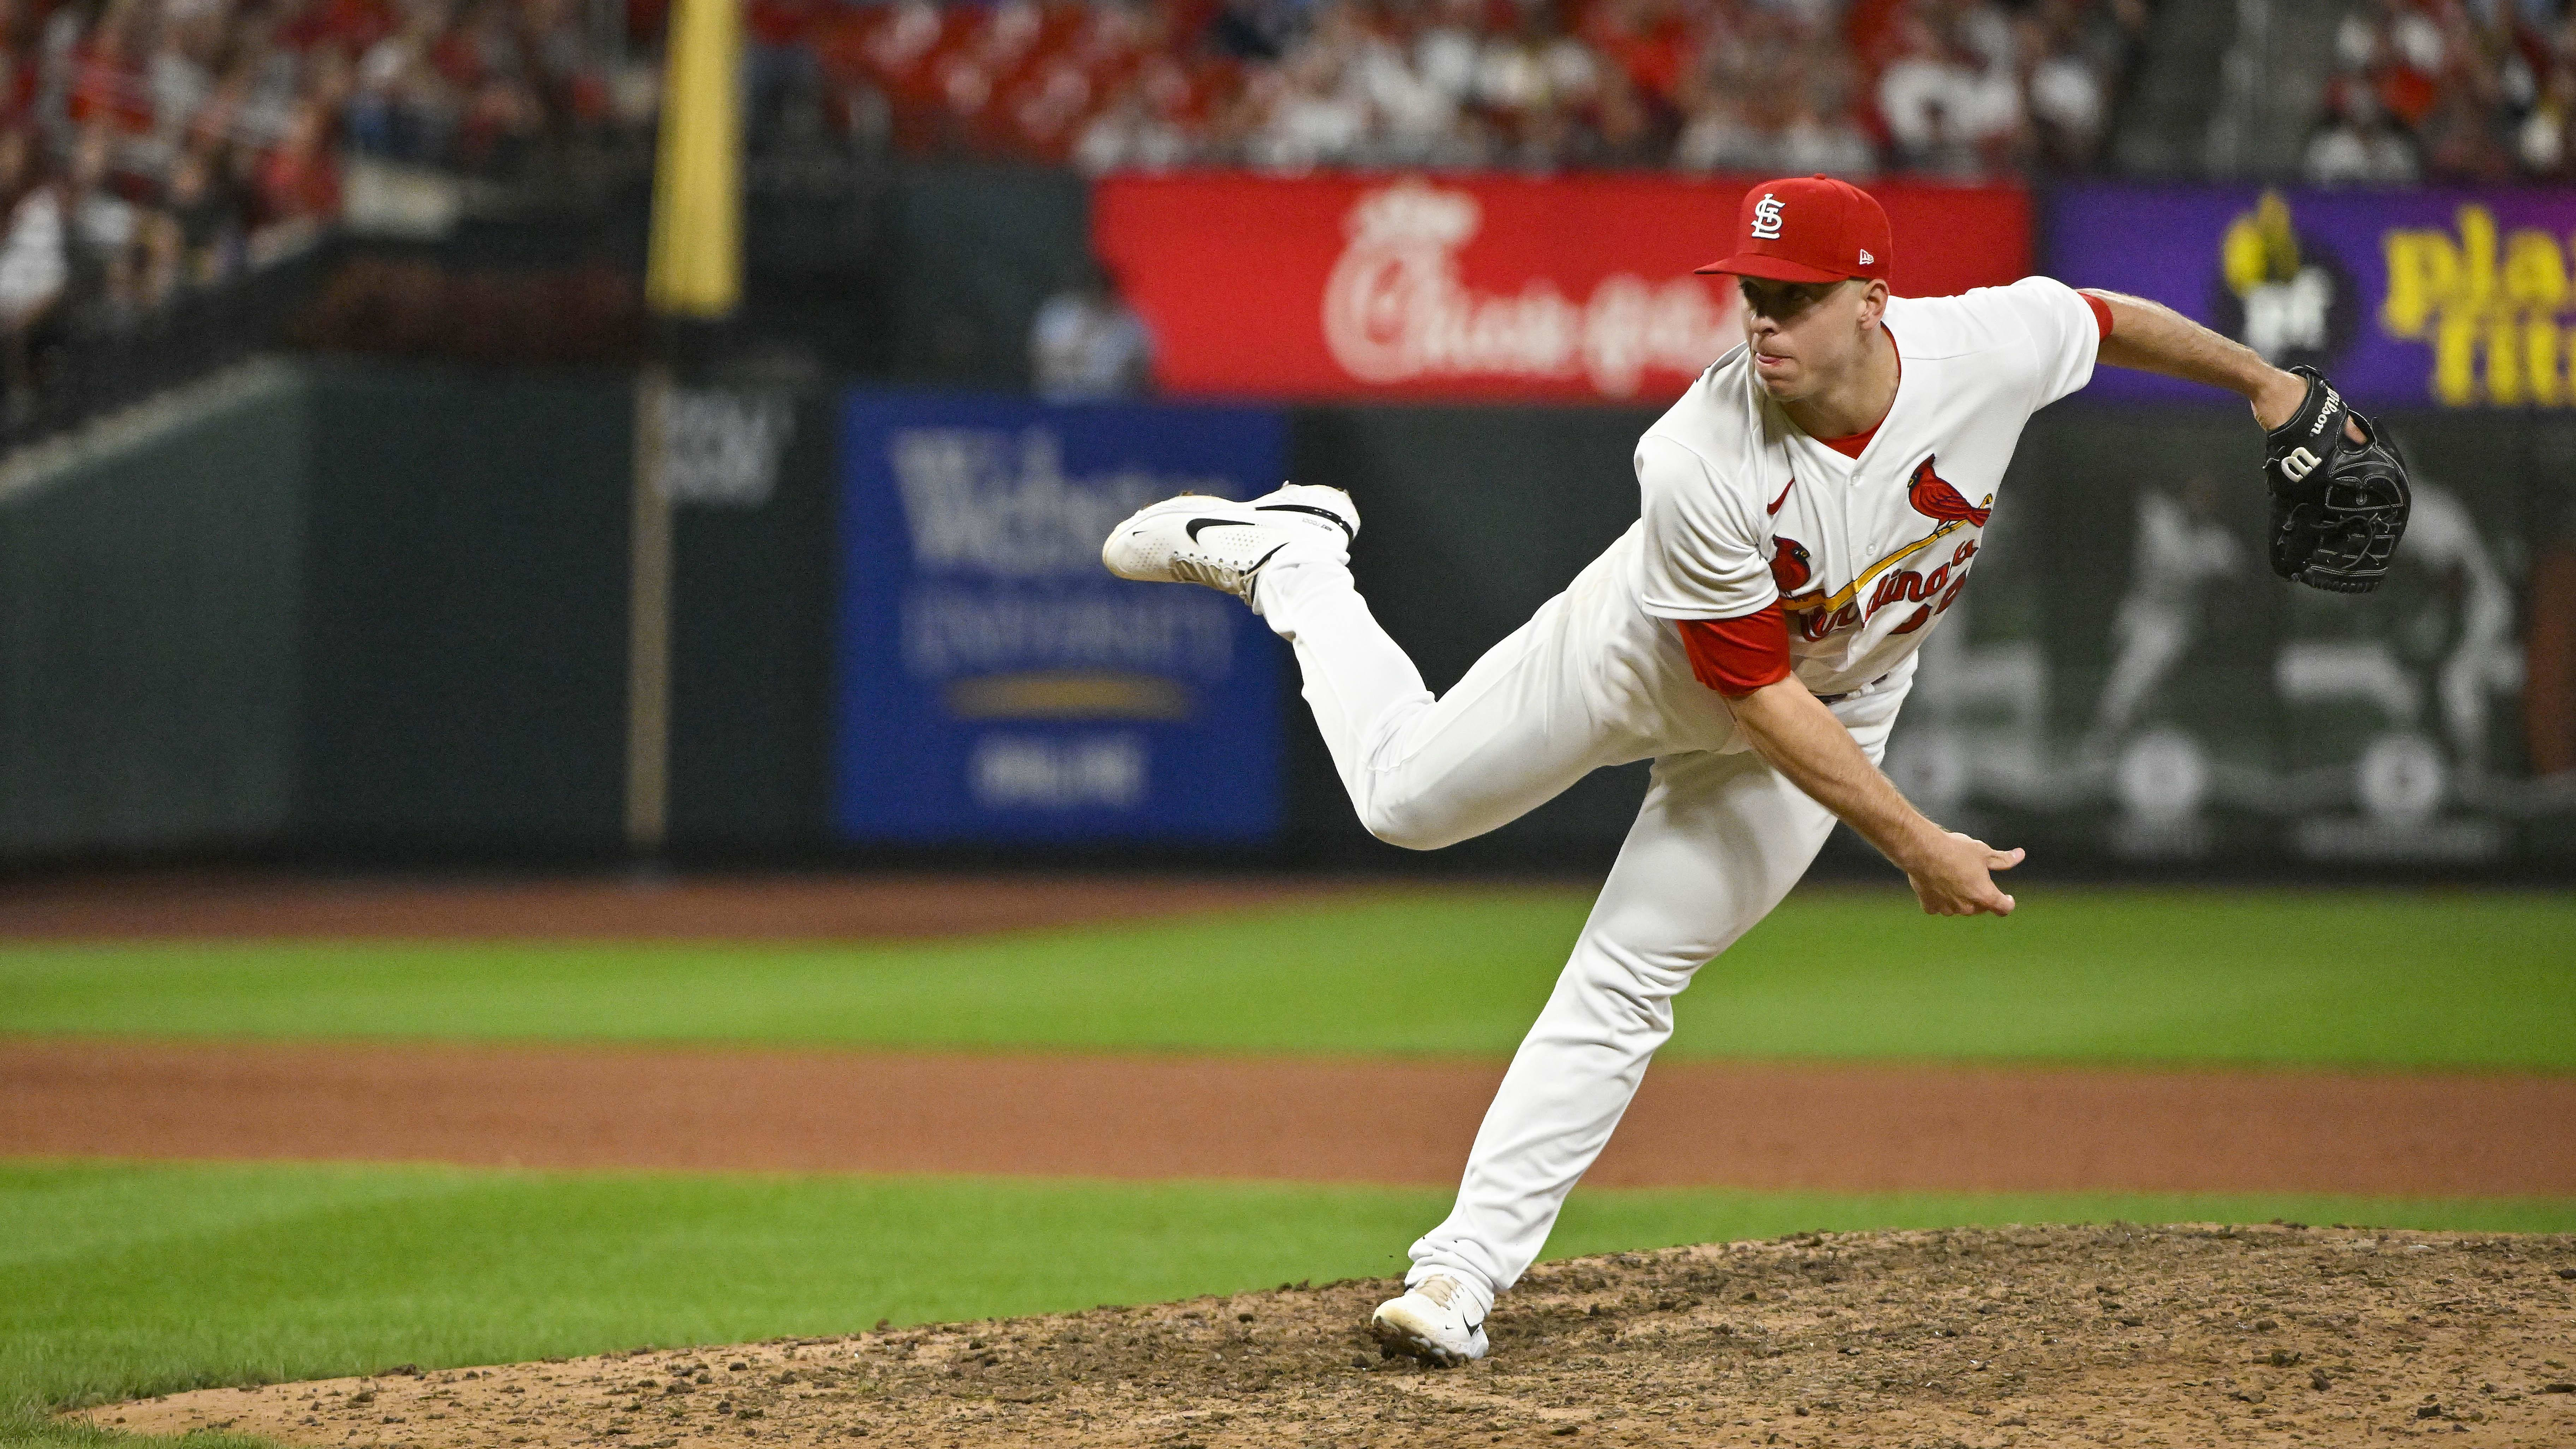 St. Louis Cardinals pitcher Ryan Helsley